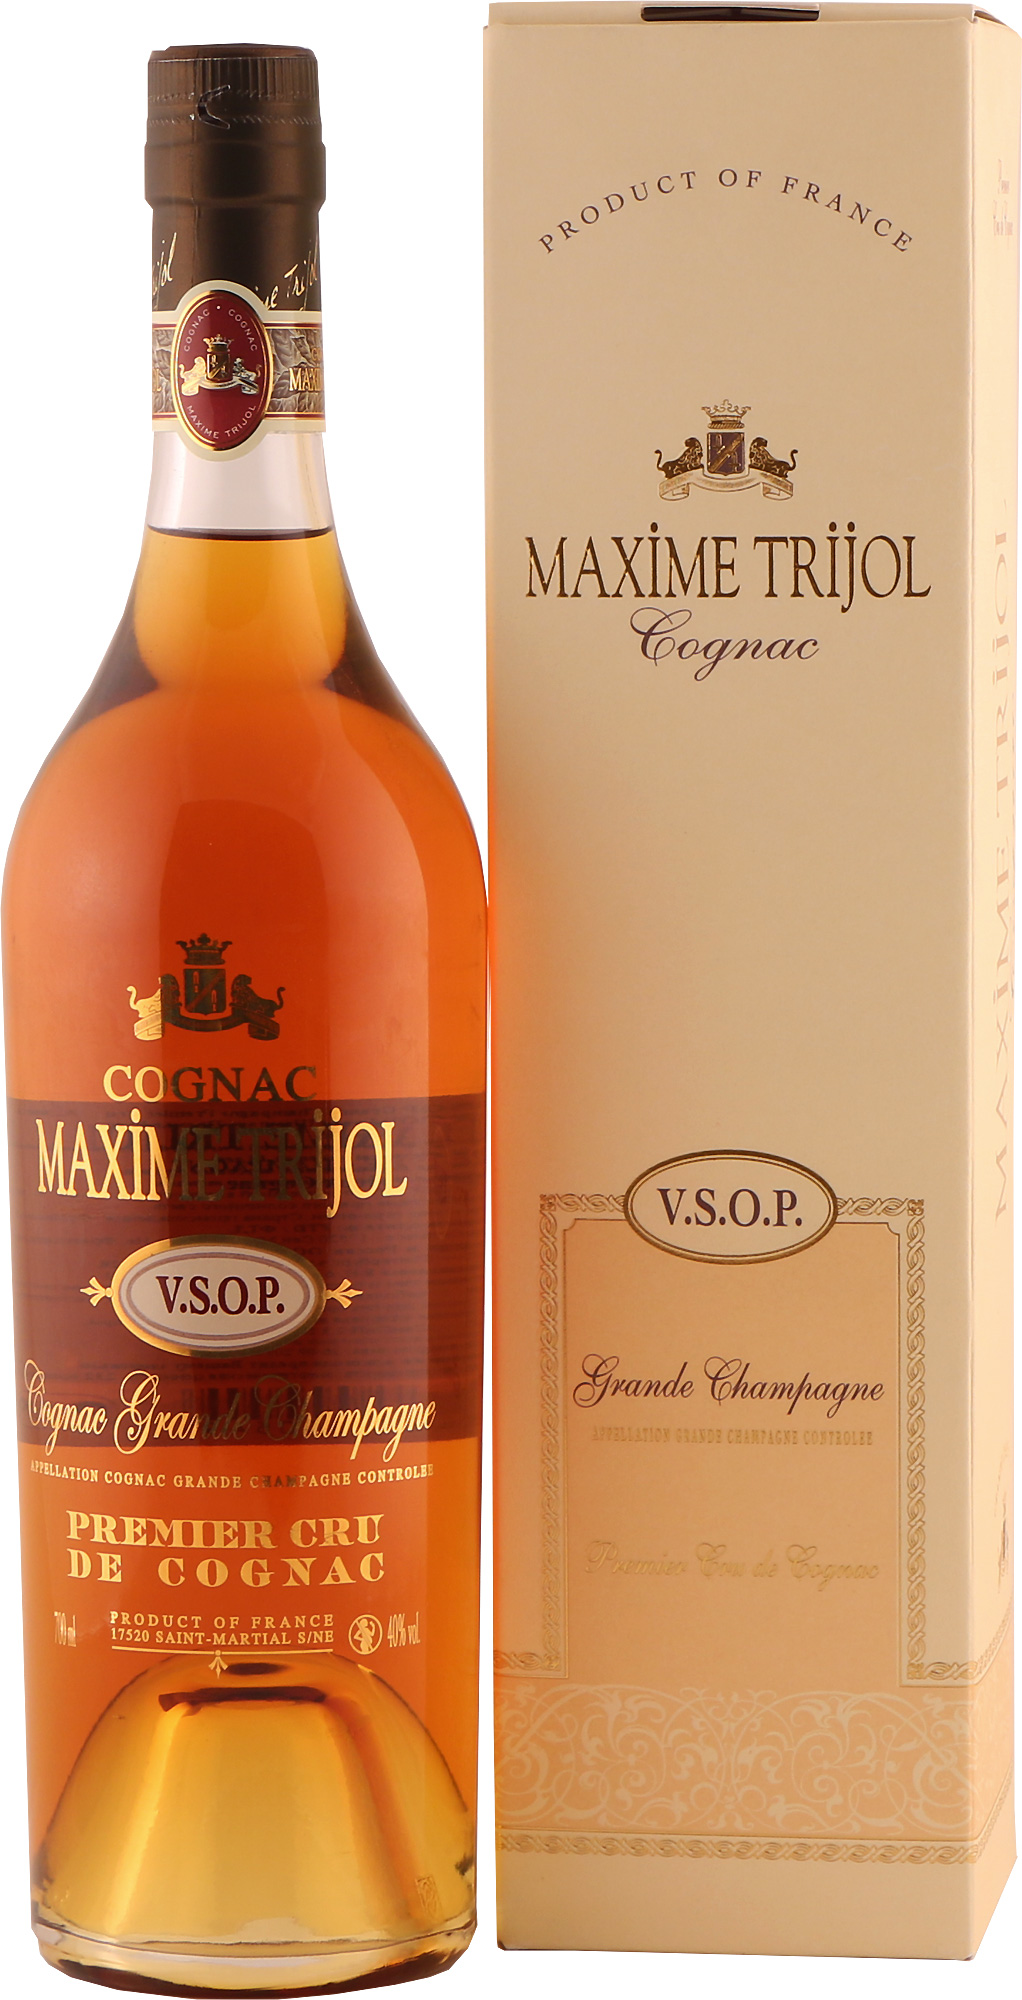 Grande champagne vsop. Коньяк Maxime Trijol. Коньяк Maxime Trijol VSOP. Maxime Trijol v.s.o.p..